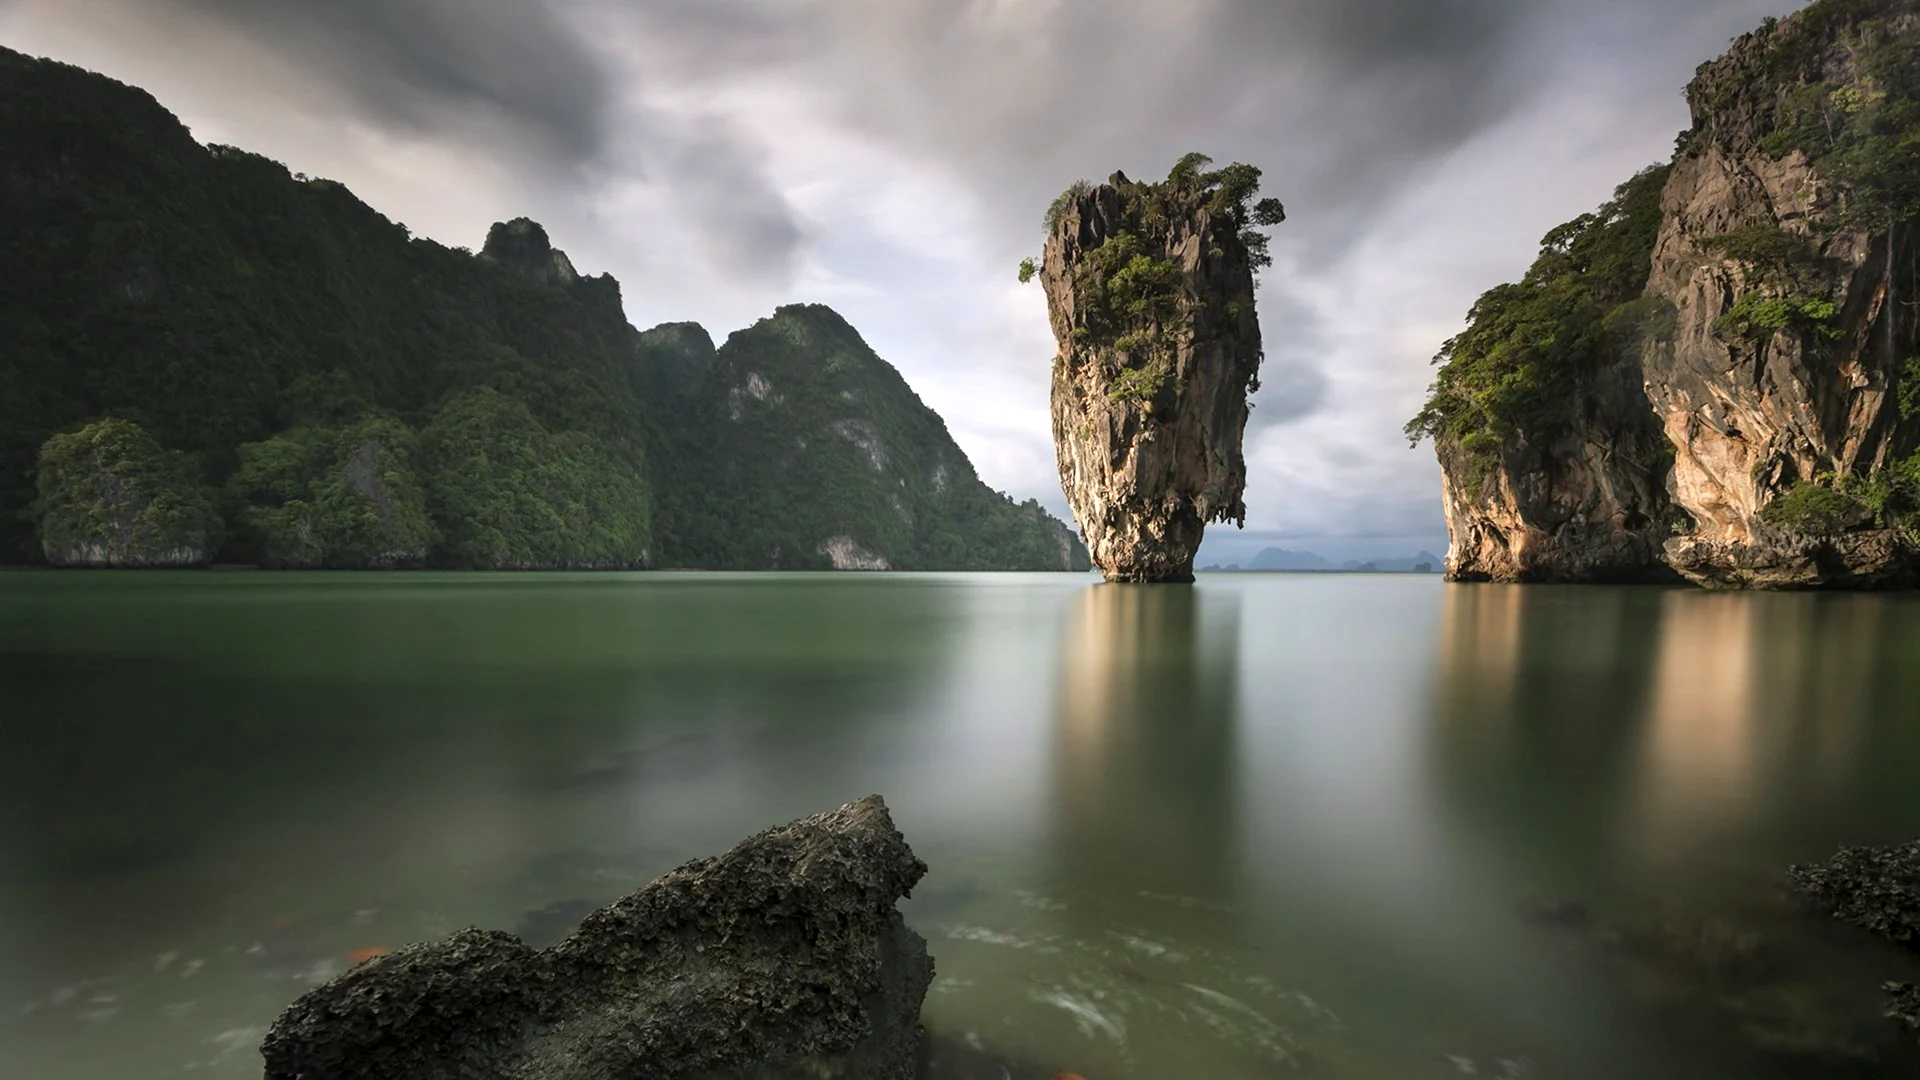 Остров Джеймса Бонда в Тайланде